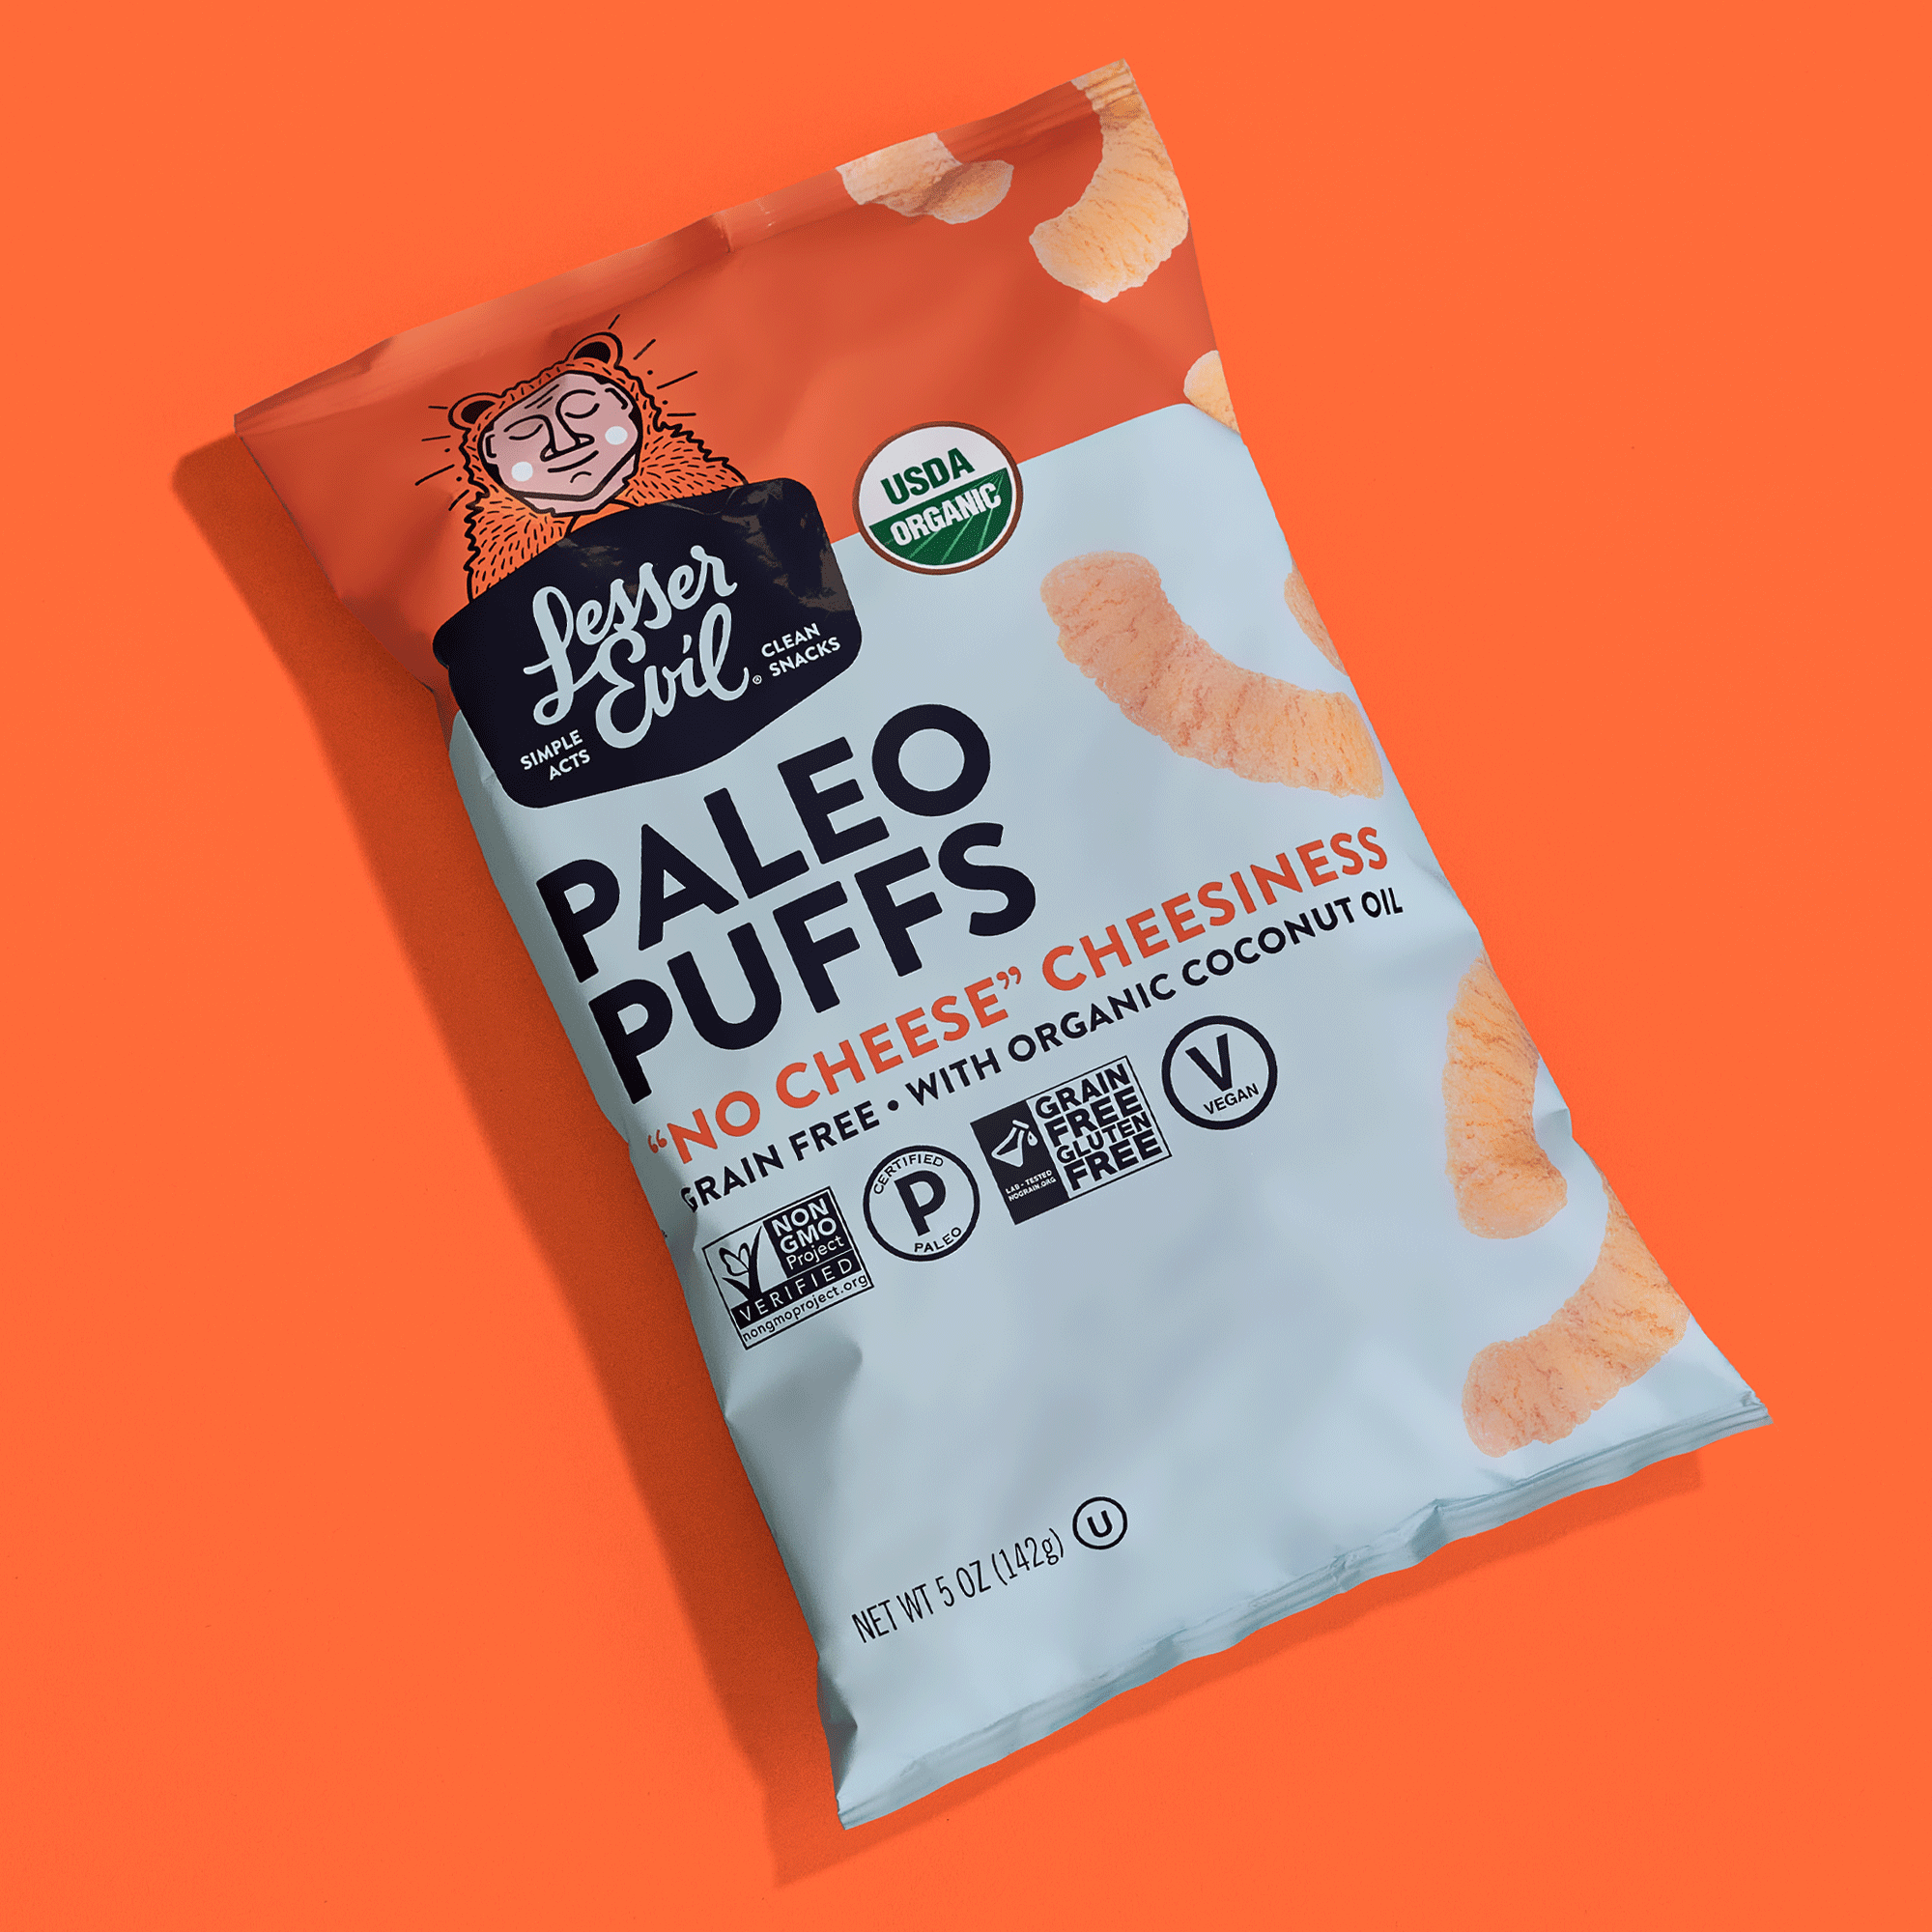 5 ounce bag of organic vegan cheese paleo puffs